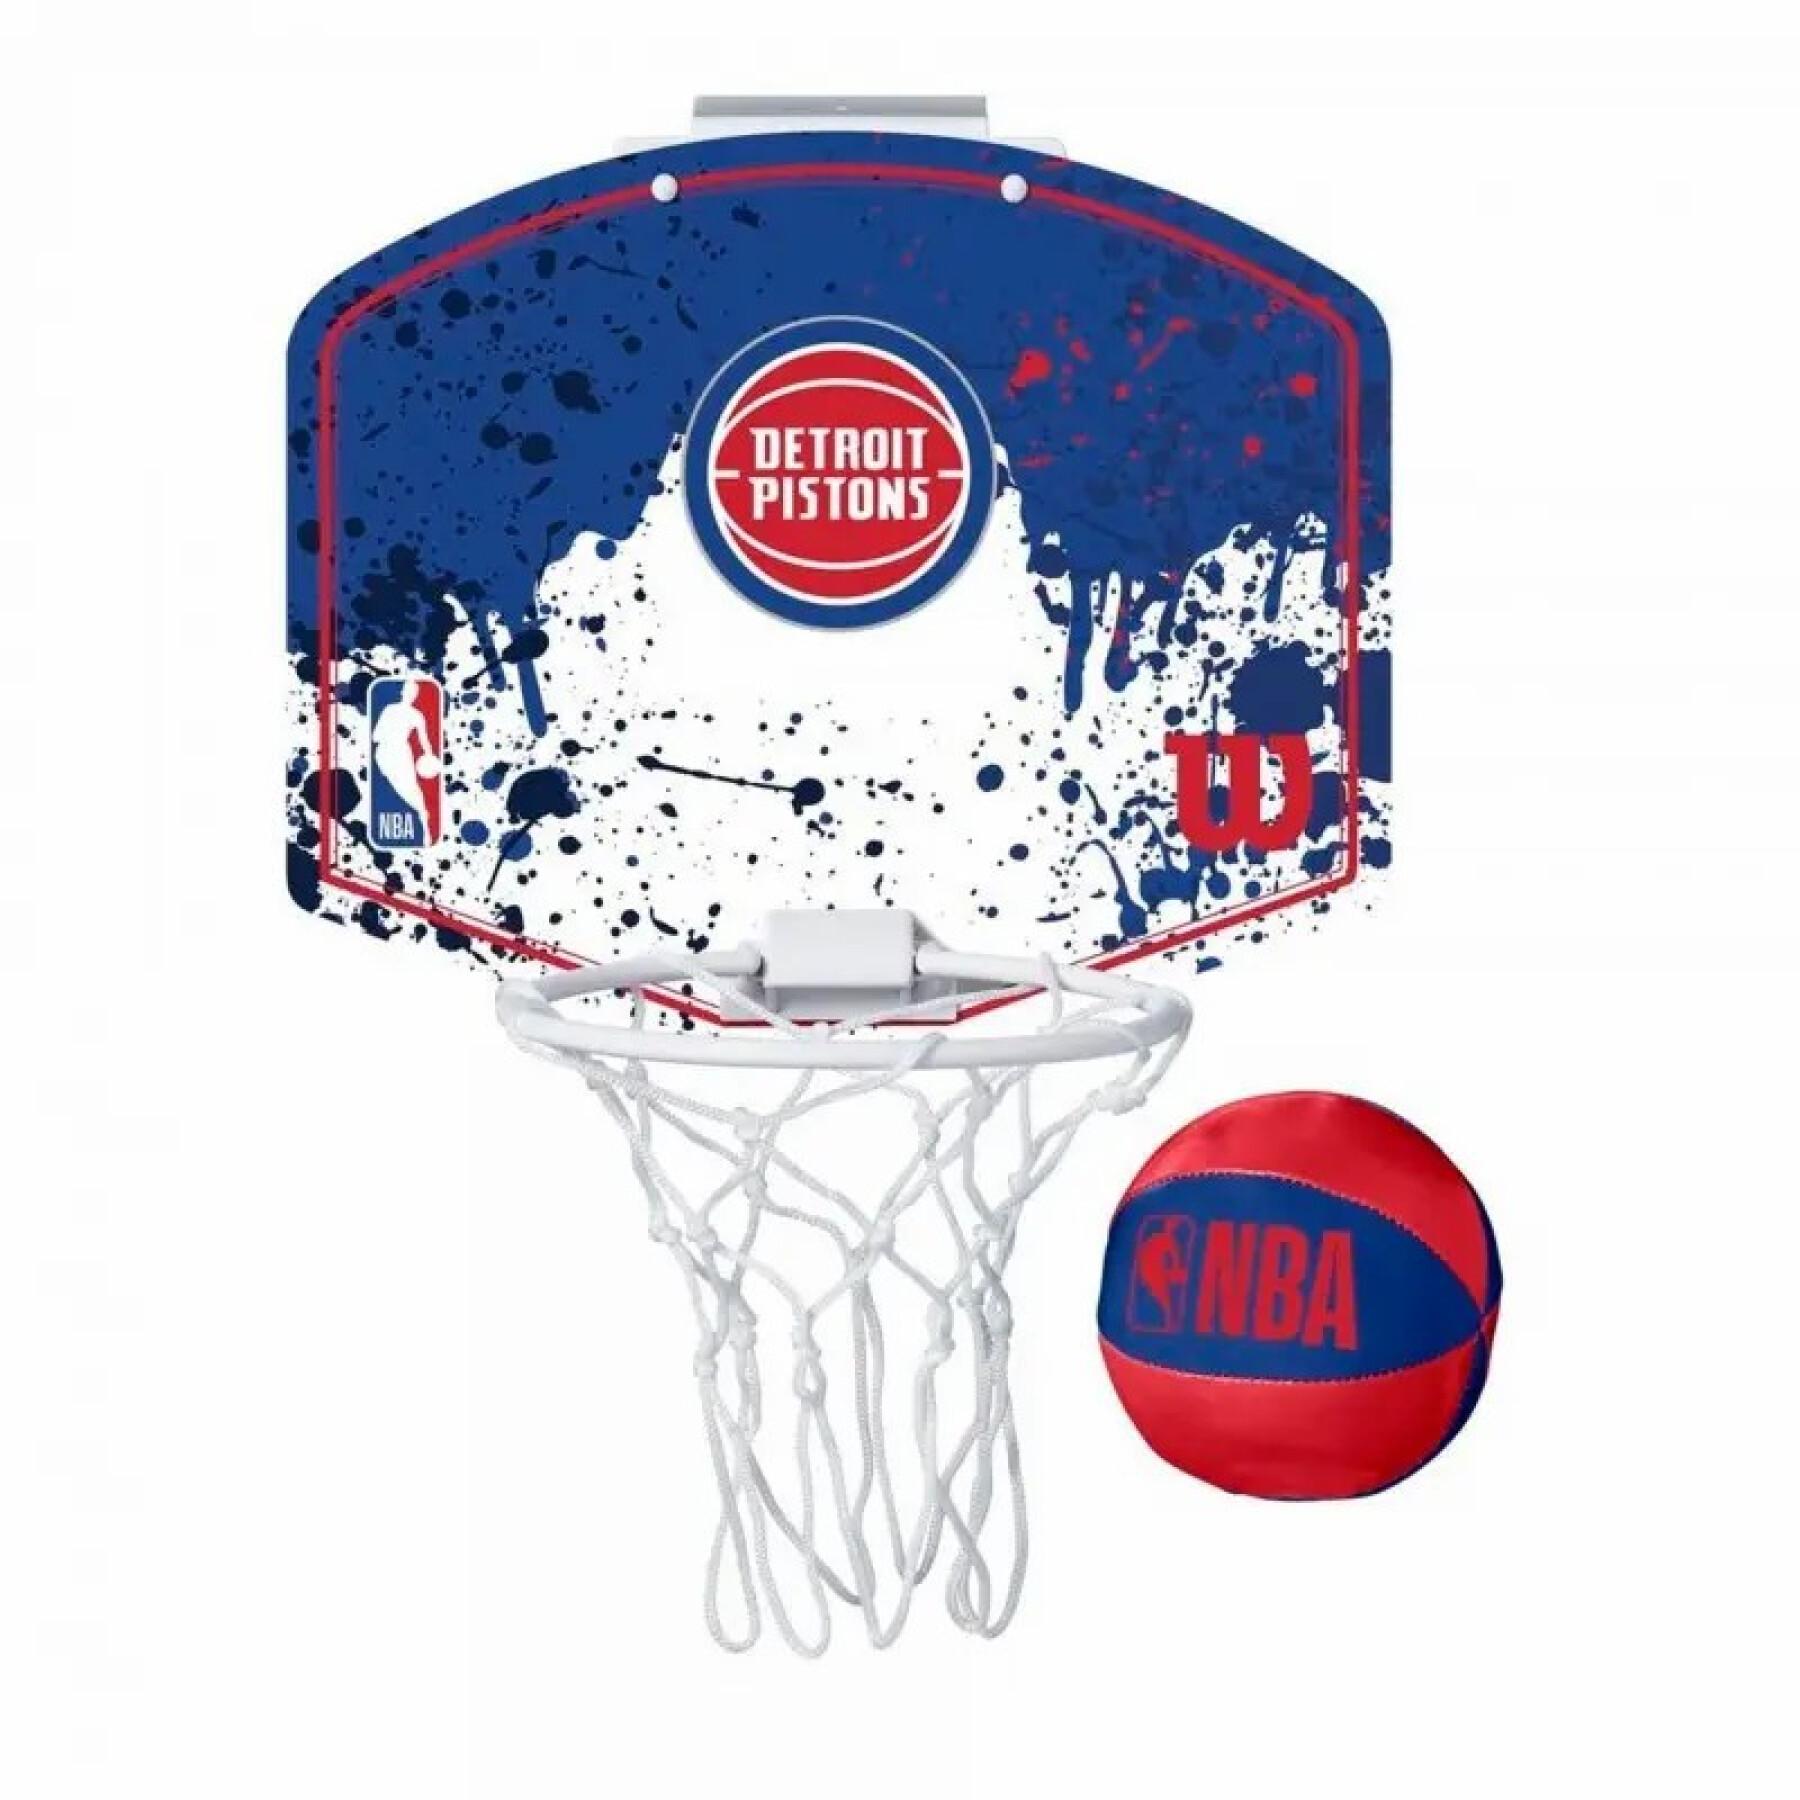 Mini basketbalhoepel Detroit Pistons NBA Team